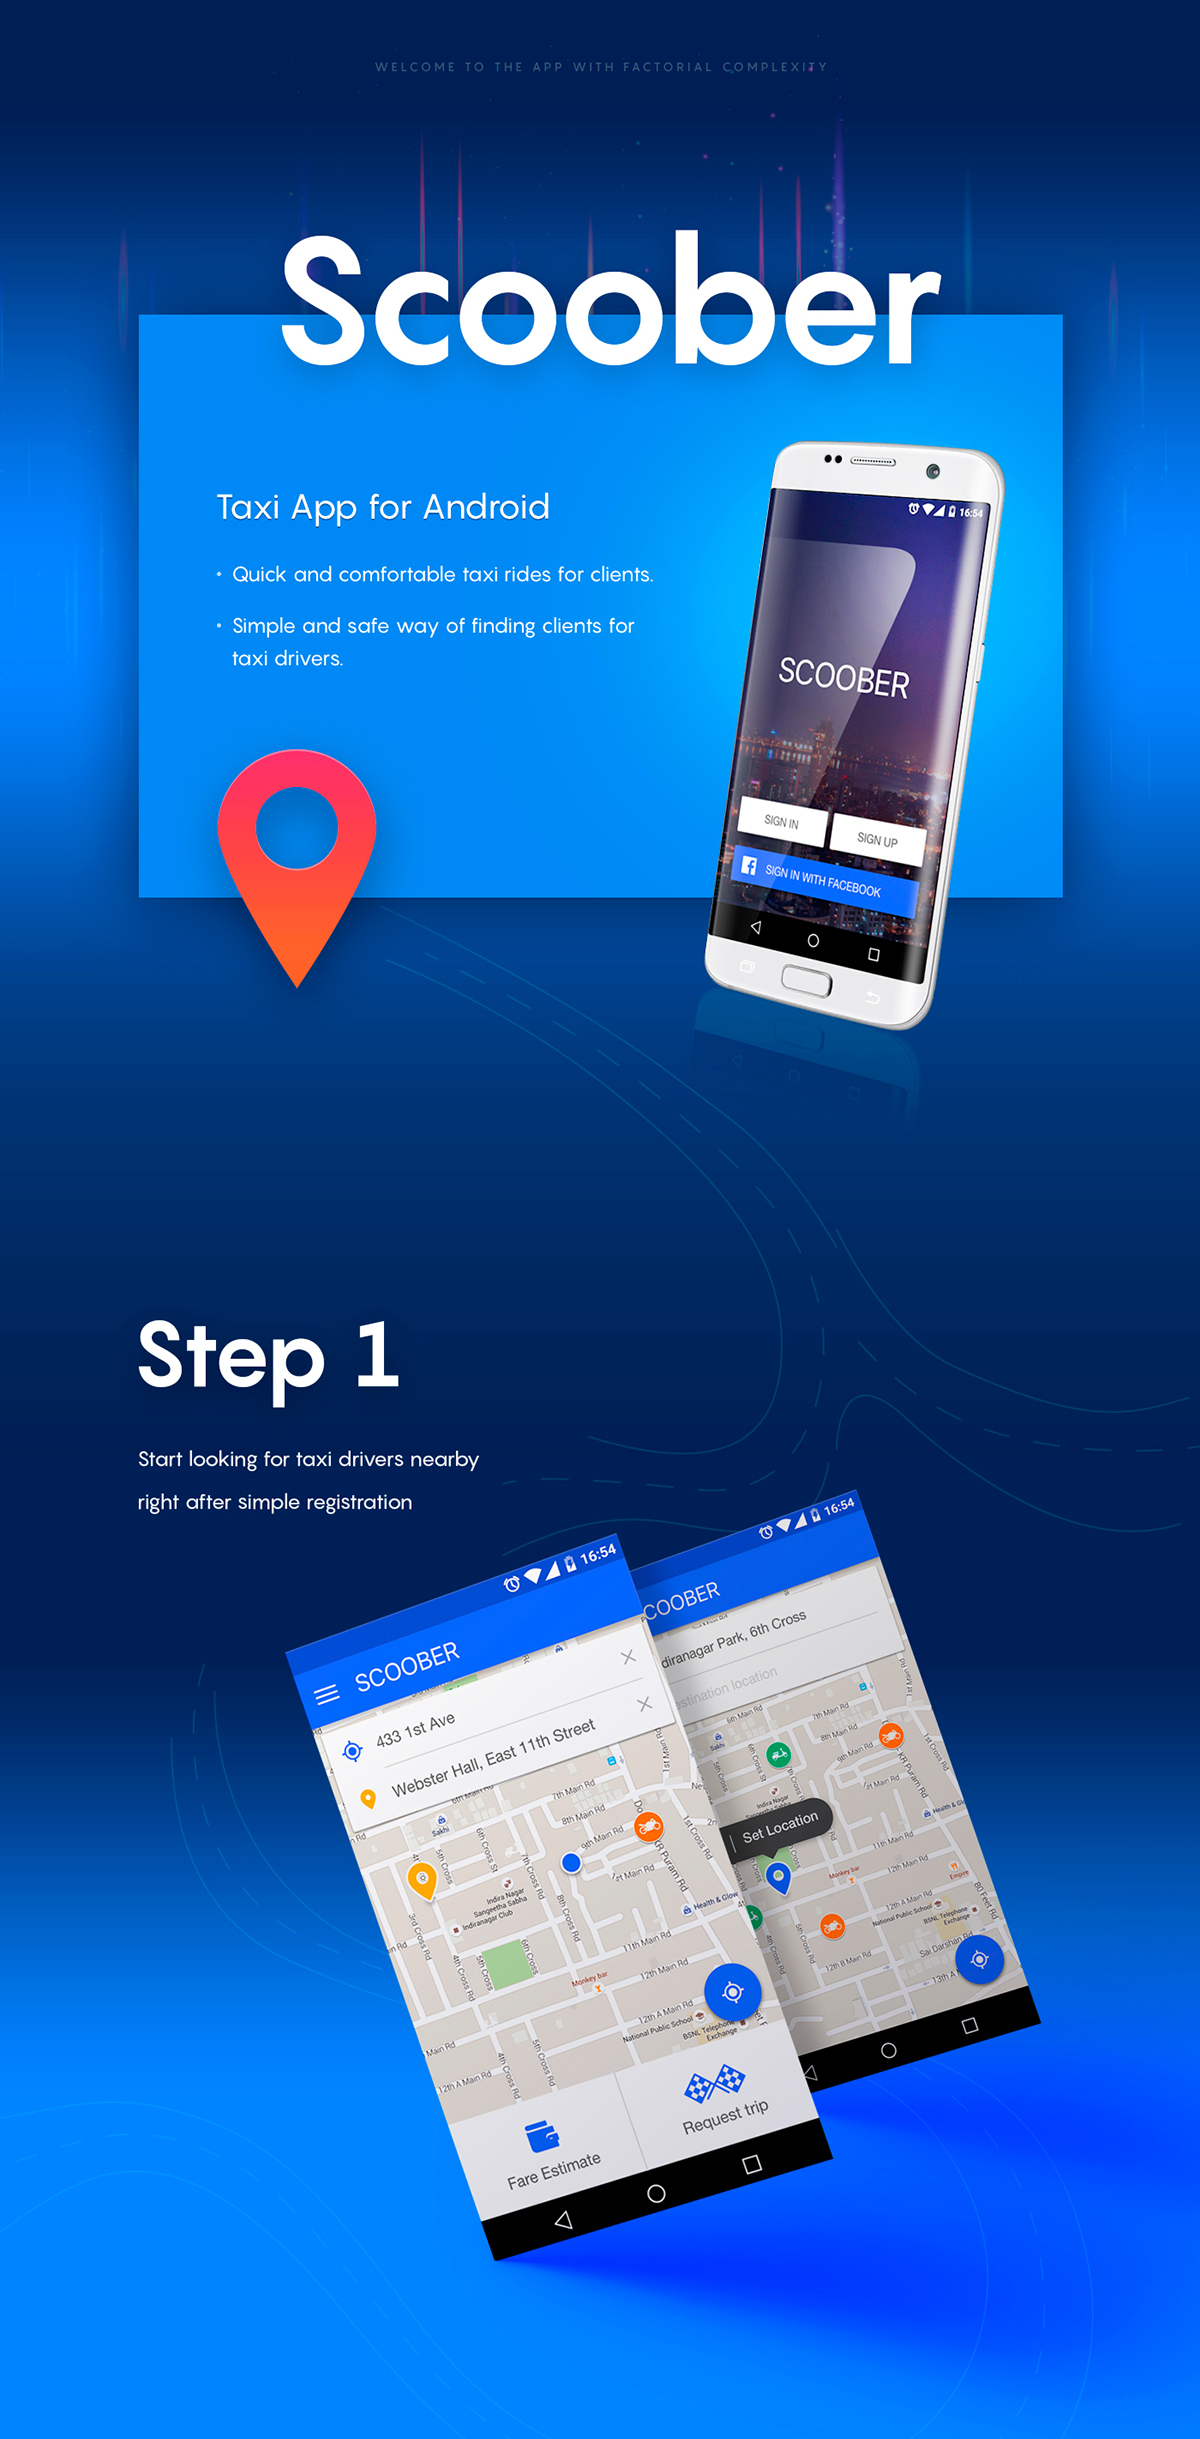 Mobile app app Android App android taxi app ui design uber app Uber Uber-like